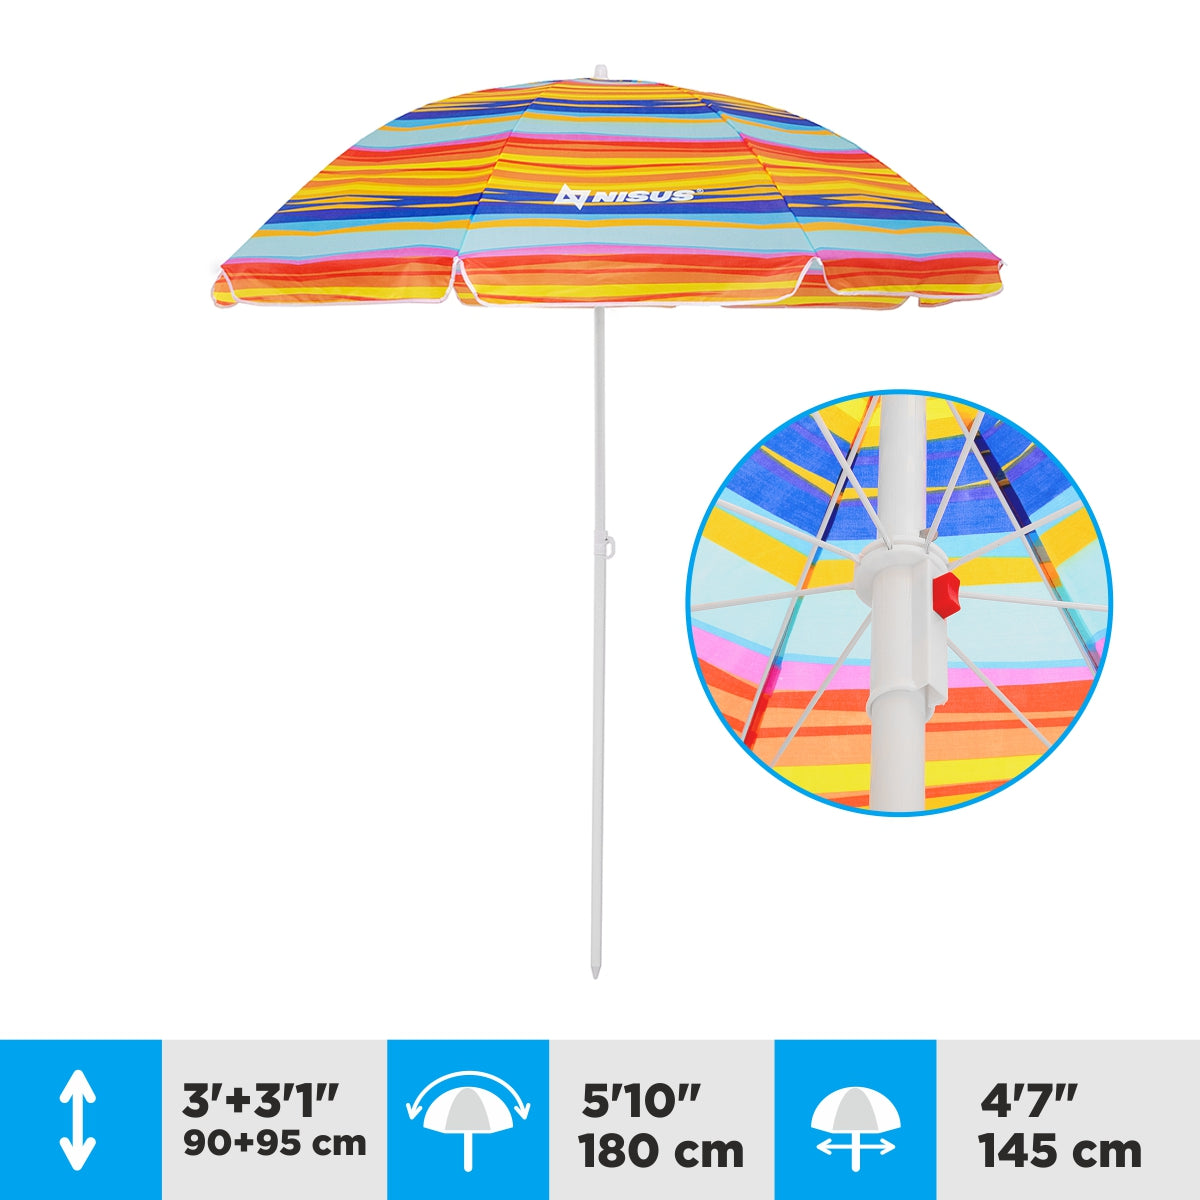 Nisus folding beach umbrella construction and dimensions